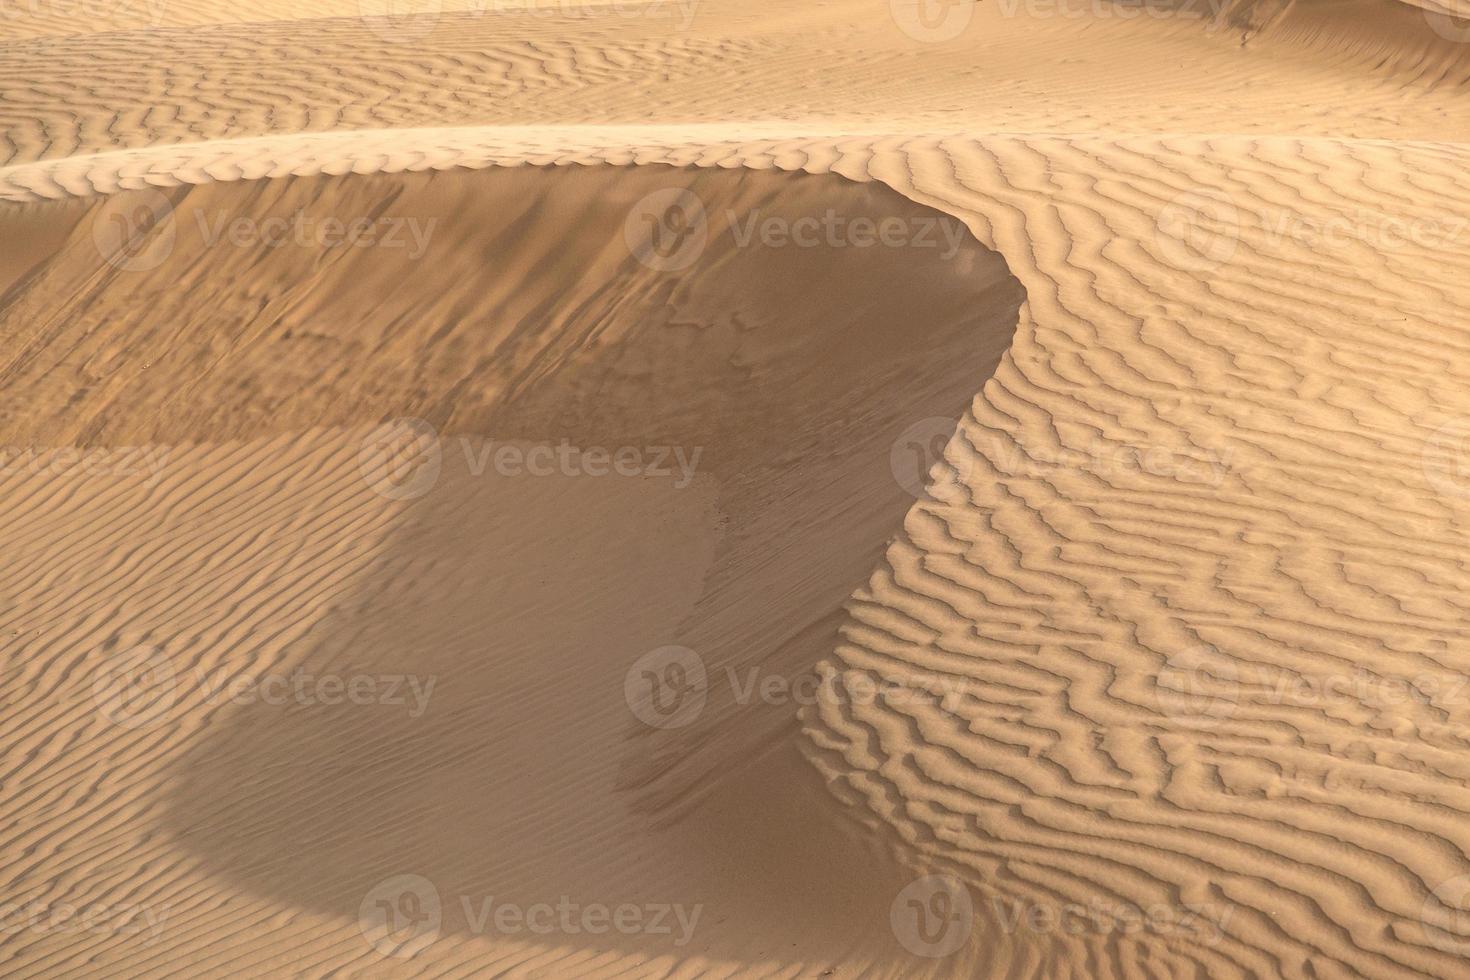 prachtige zandduin in de woestijn van thar, jaisalmer, rajasthan, india. foto